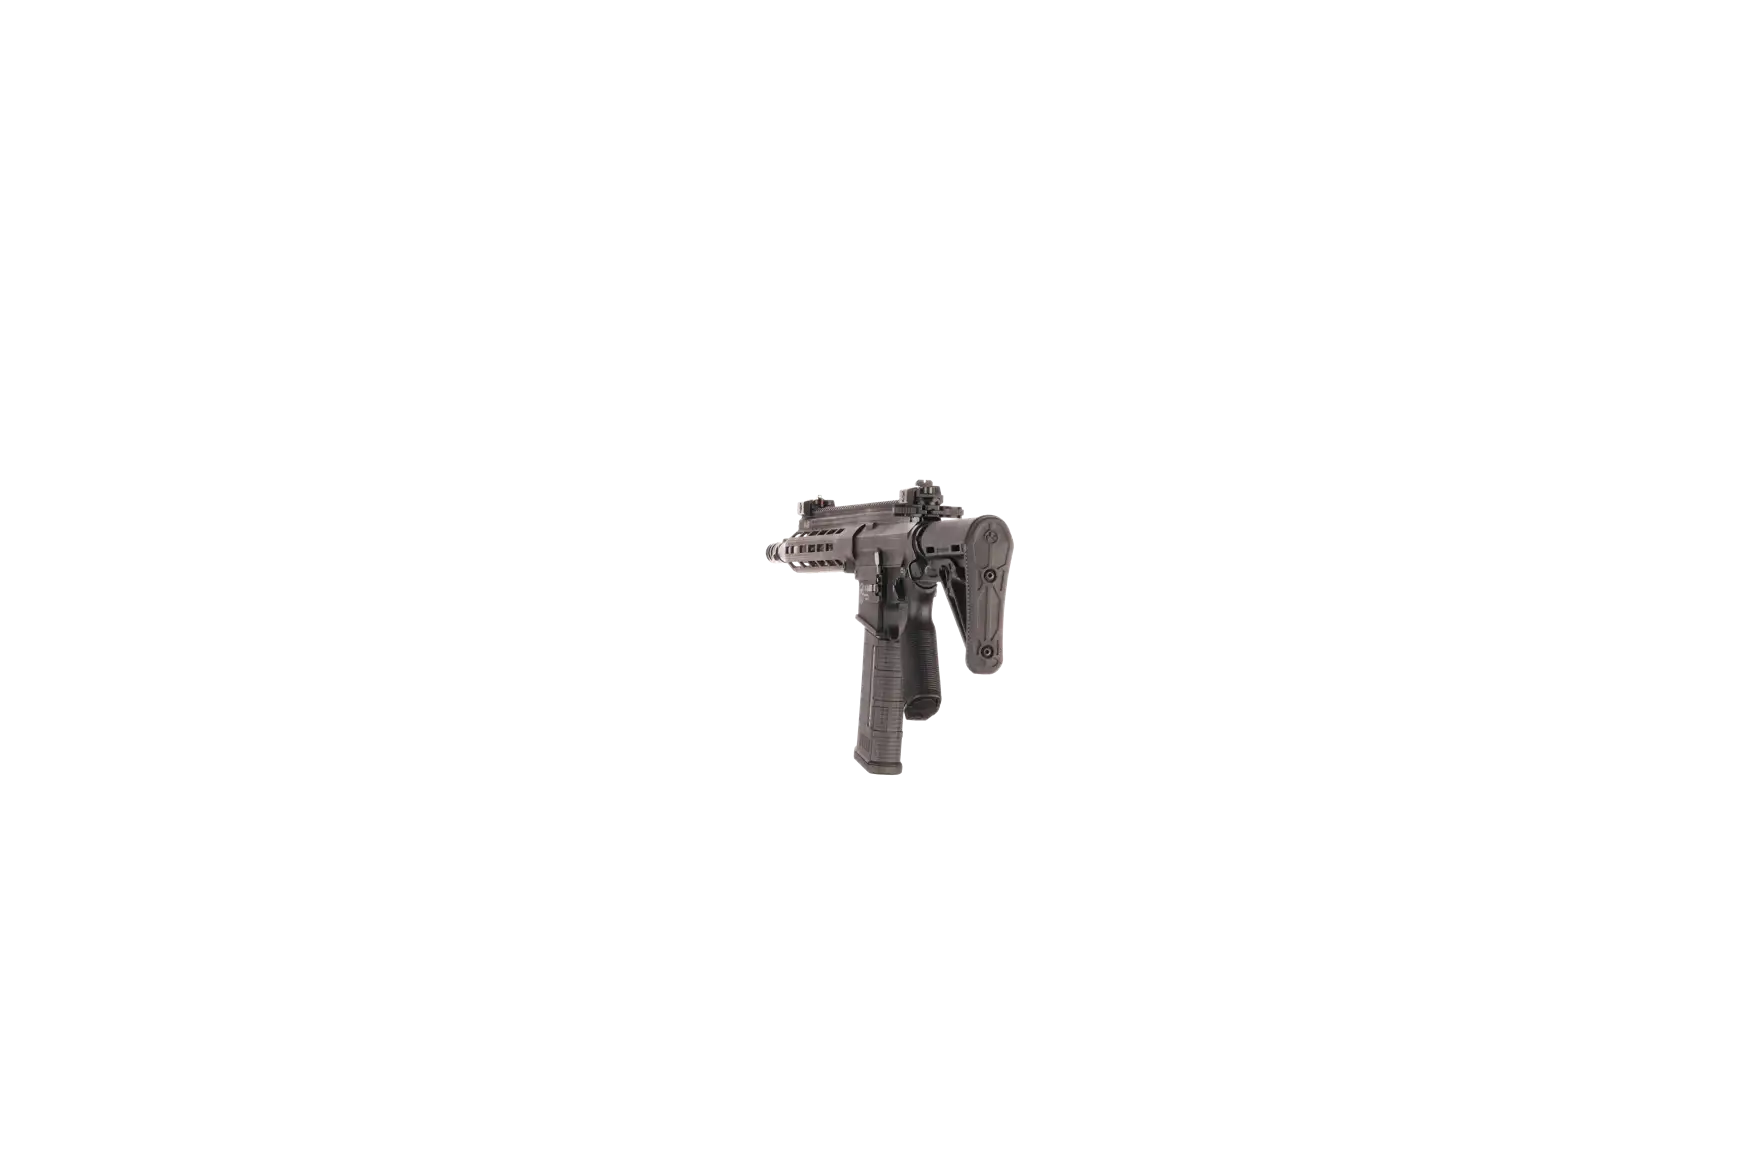 Náhledový obrázek pušky V-AR 762 x 45mm SPINVIEW 1 R51